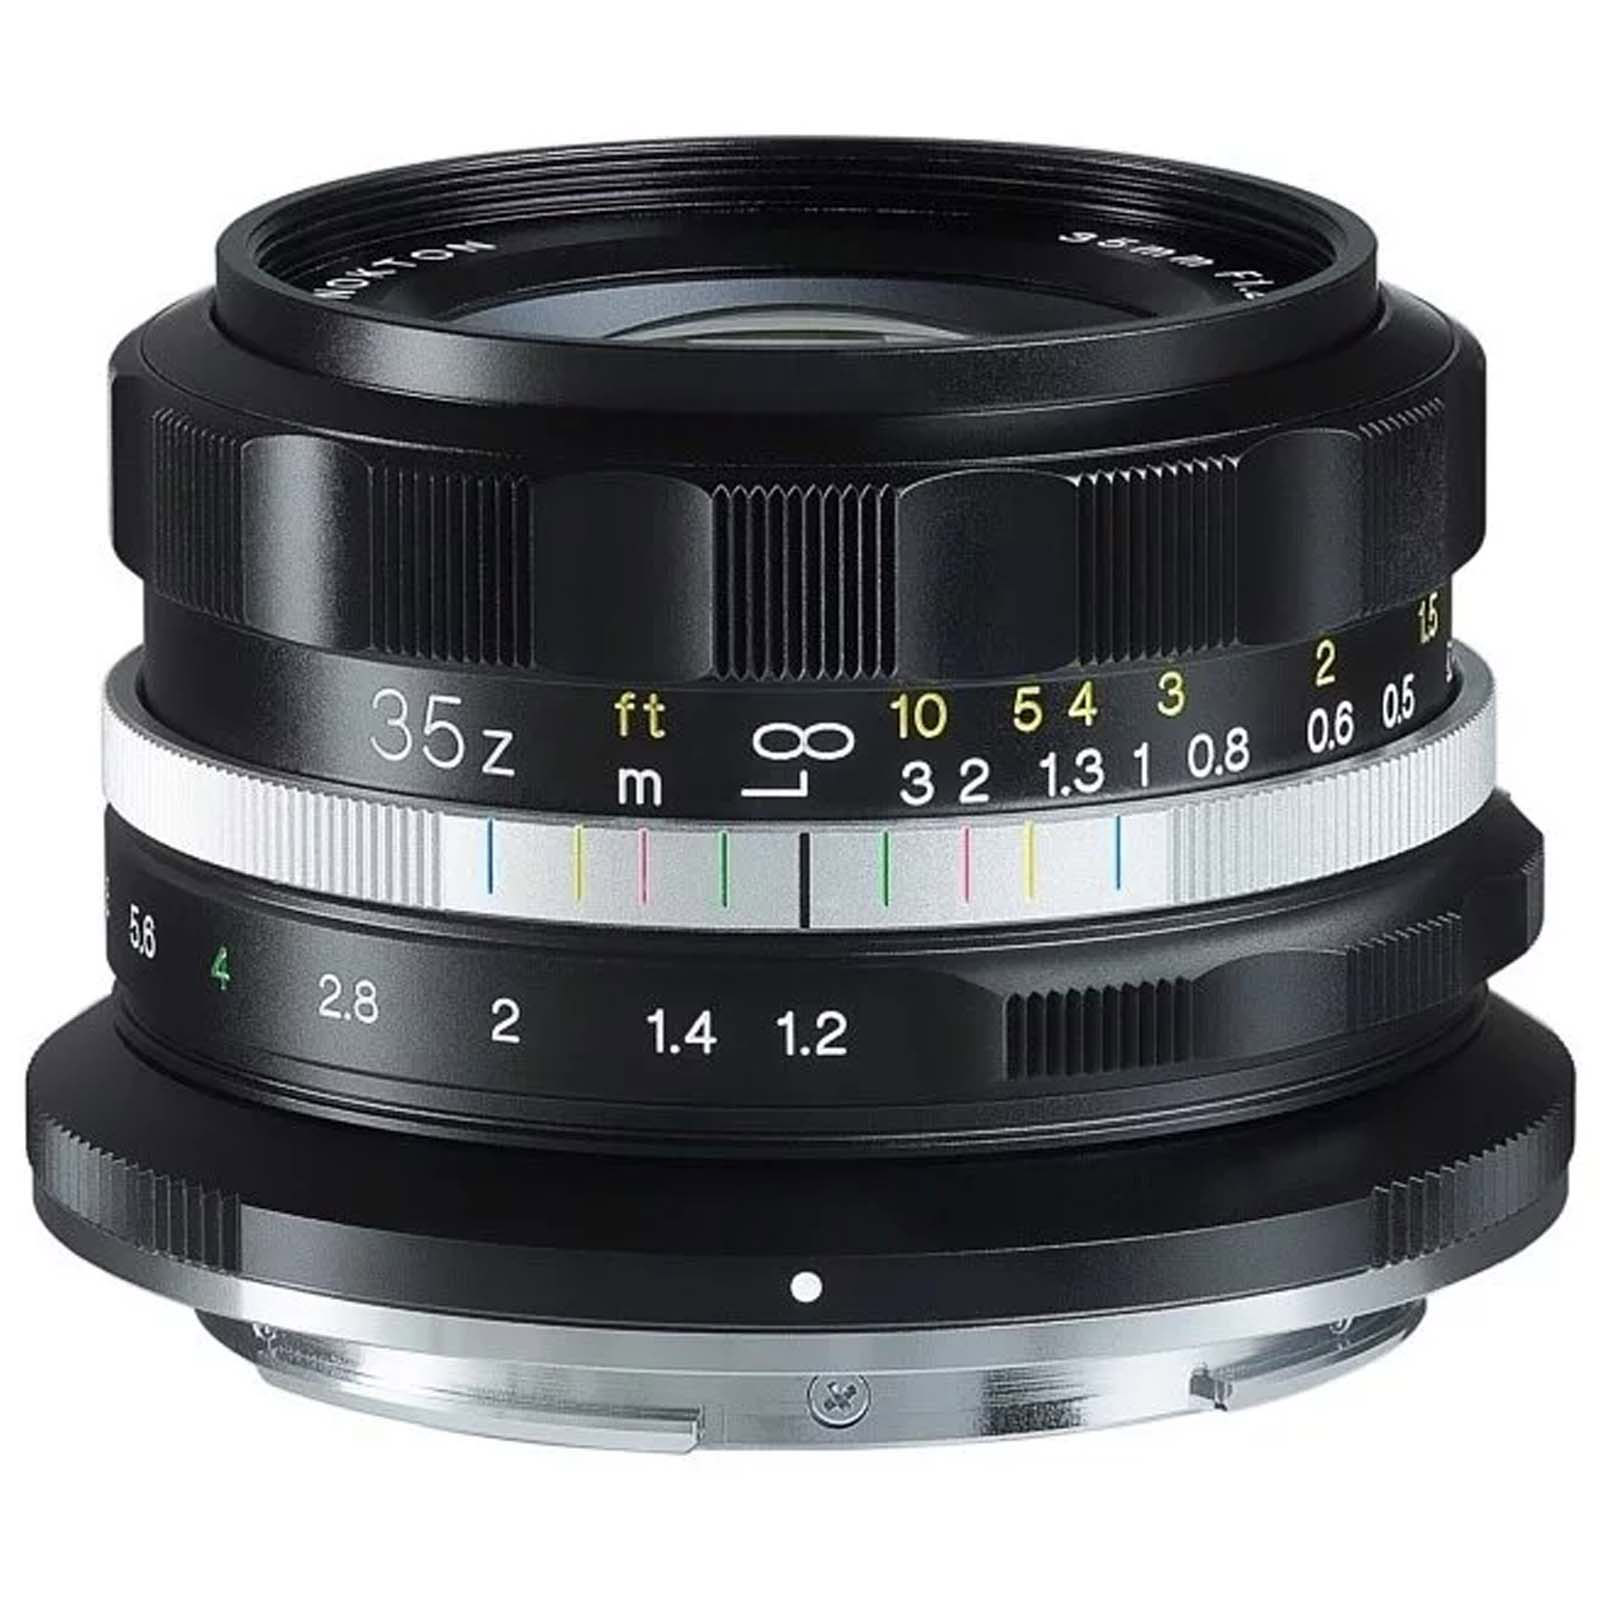 Voigtlander D 35mm f1.2 Nokton Lens for Nikon Z | Wex Photo Video